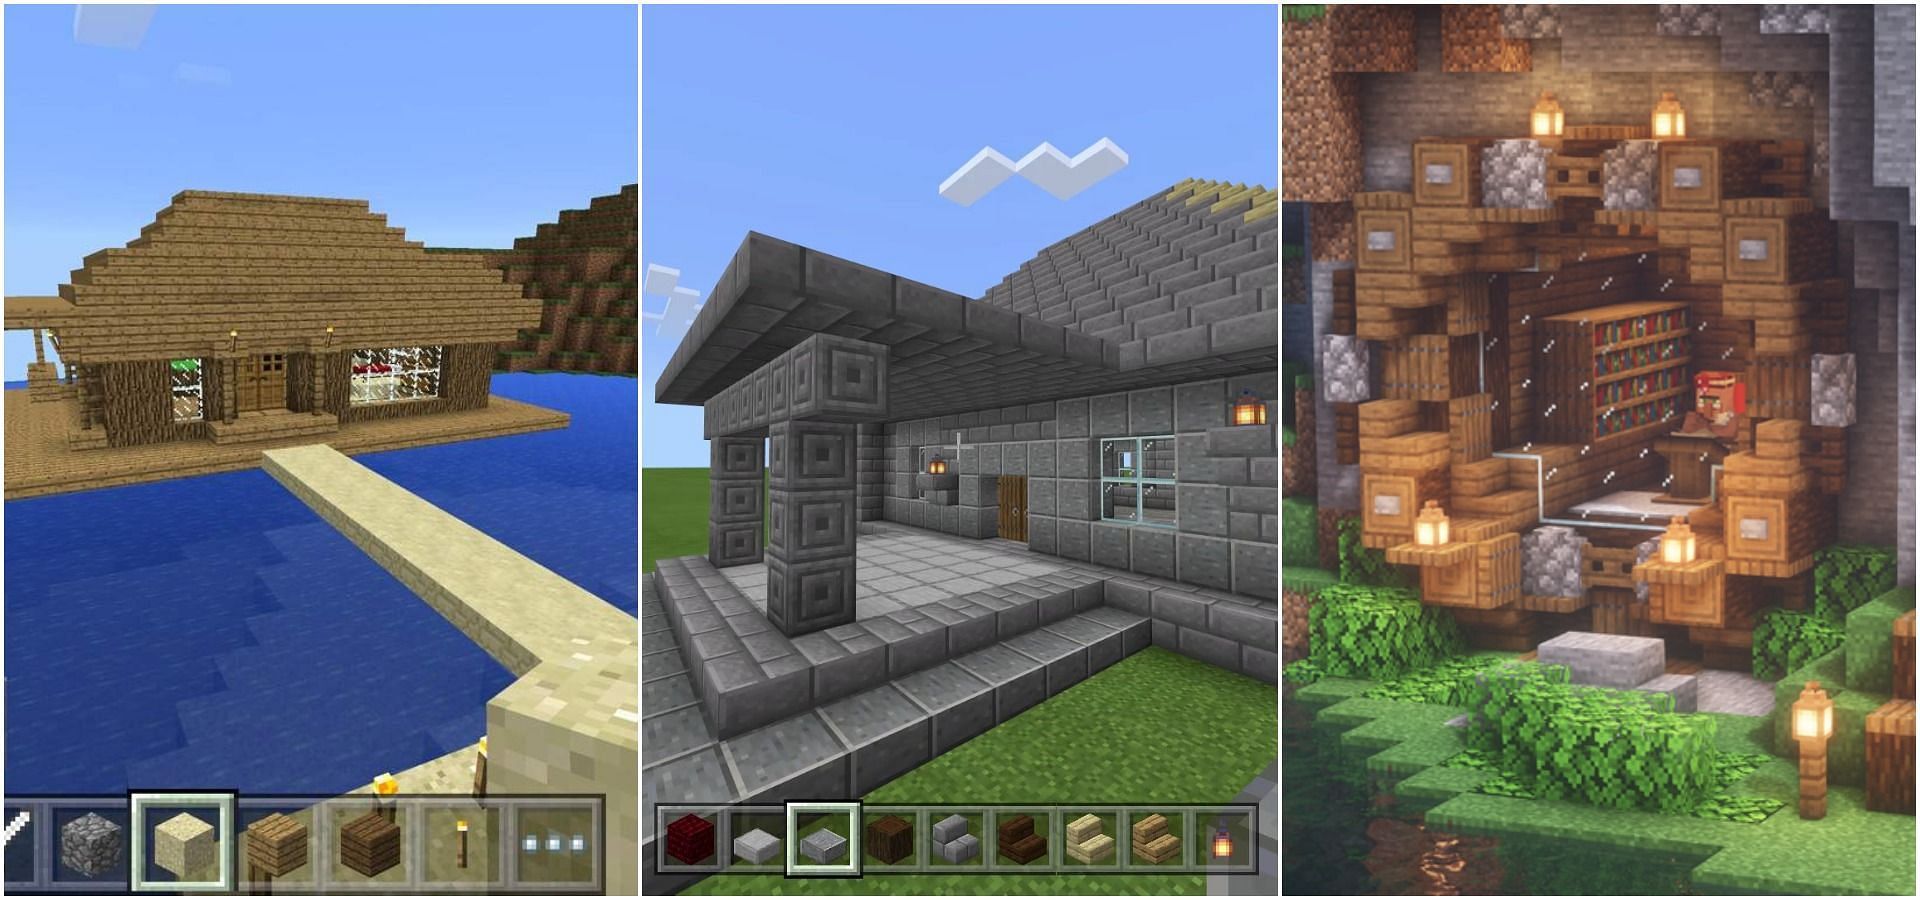 minecraft stone brick house designs